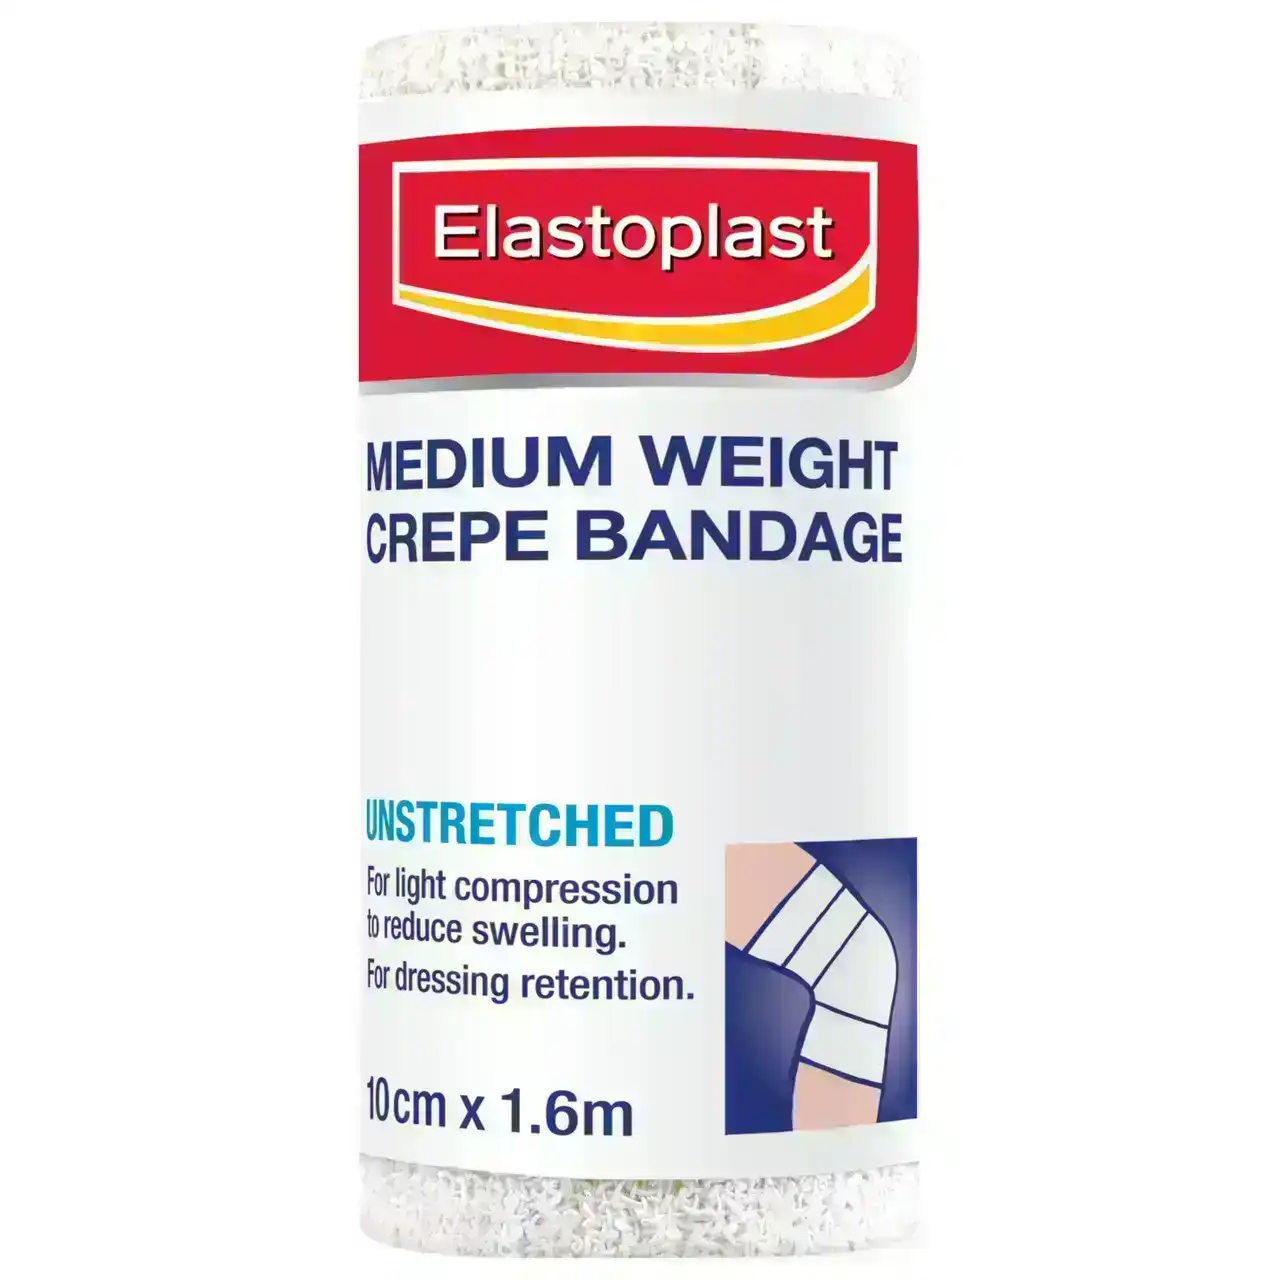 Elastoplast Mw Crepe Bandage 10cm X 1.6m